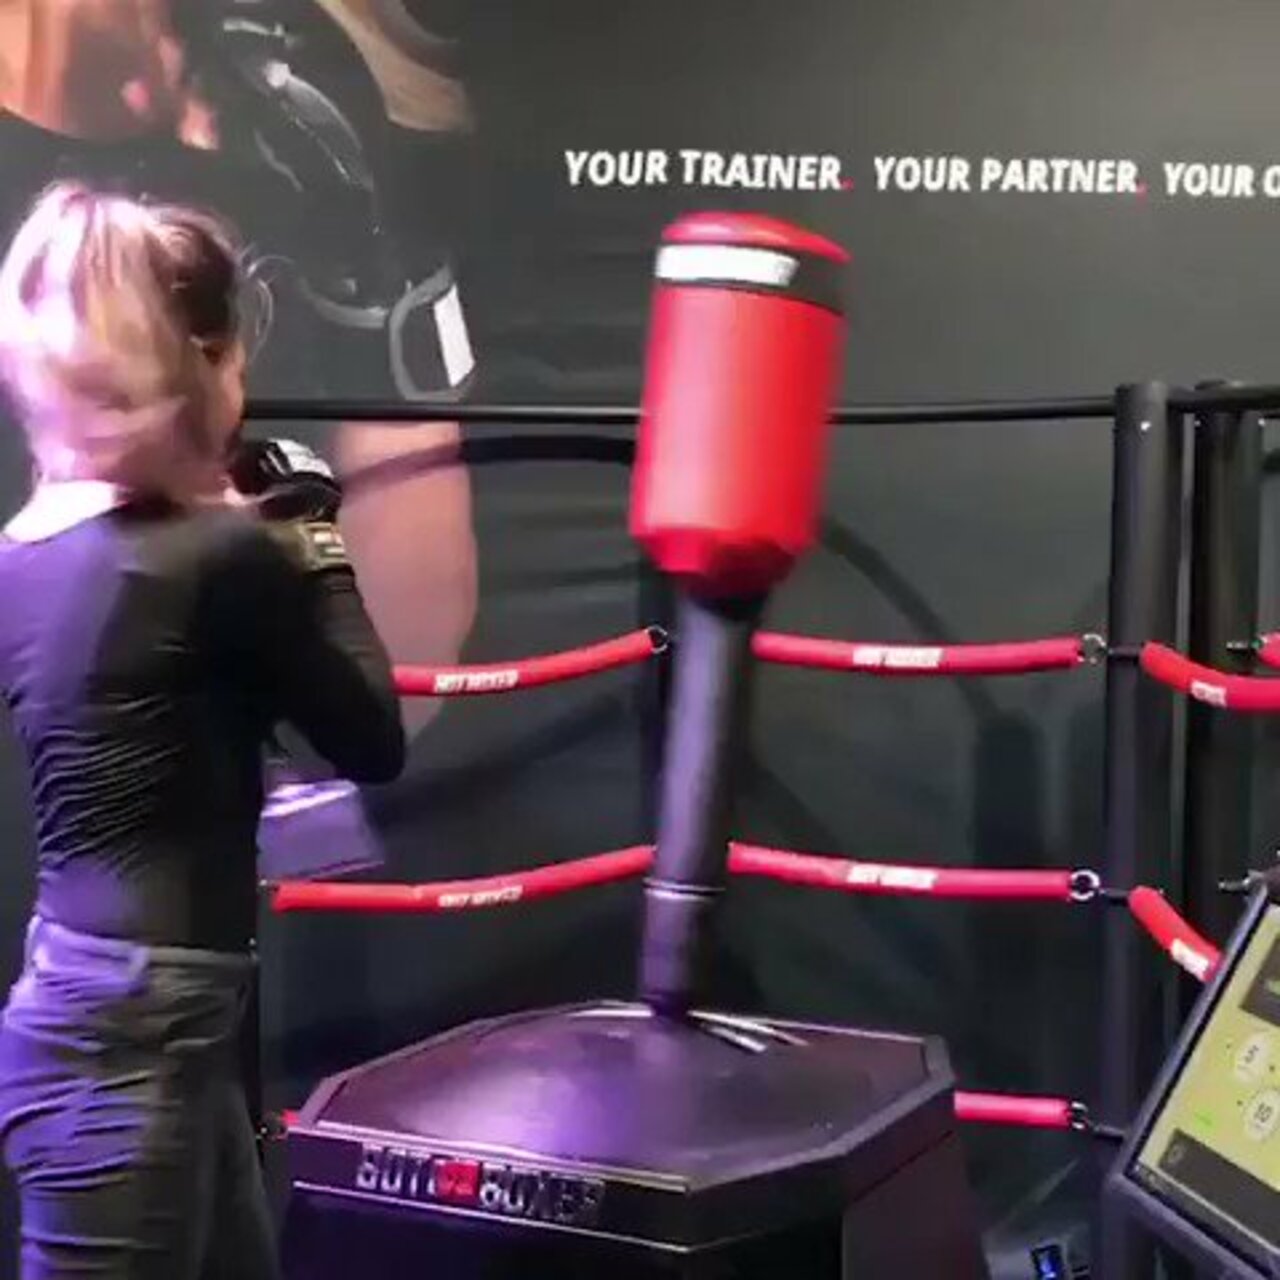 A #Robotic boxing partner by @Cheddar | #AI #ArtificialIntelligence #Technology #Robots #Digital #DigitalTransformation #Innovation #Sensors #Autonomous #Wireless #HealthTech #RT Cc: @rajat_shrimal @evankirstel @MikeQuindazzi https://t.co/z4zAjgfHUk https://t.co/jmvMBnvde9